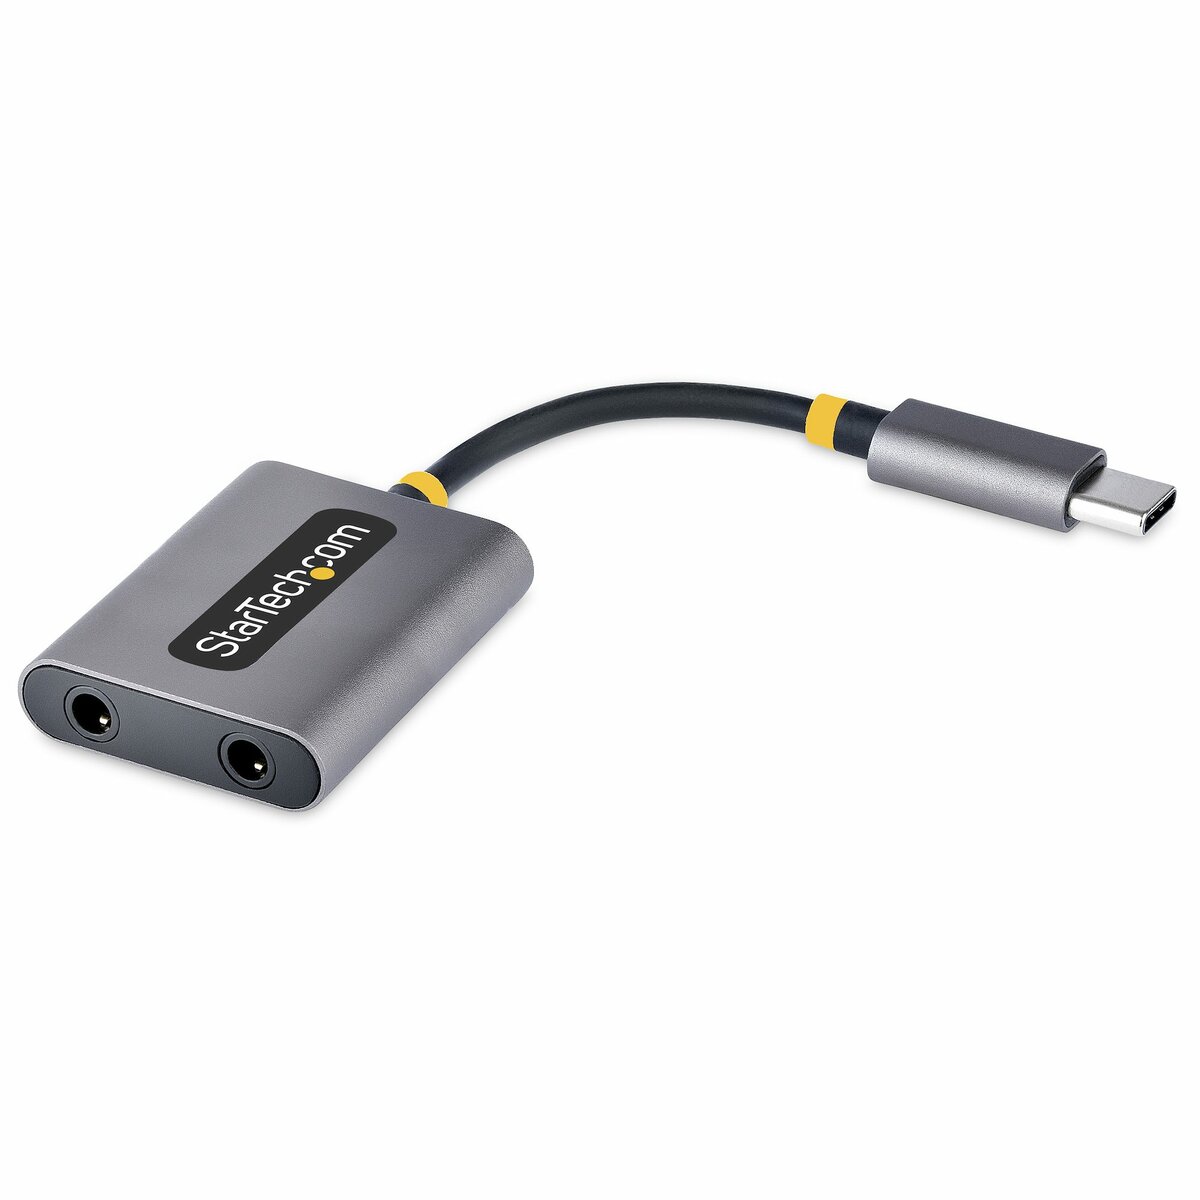 Product  StarTech.com USB-C Headphone Splitter, USB Type C Dual